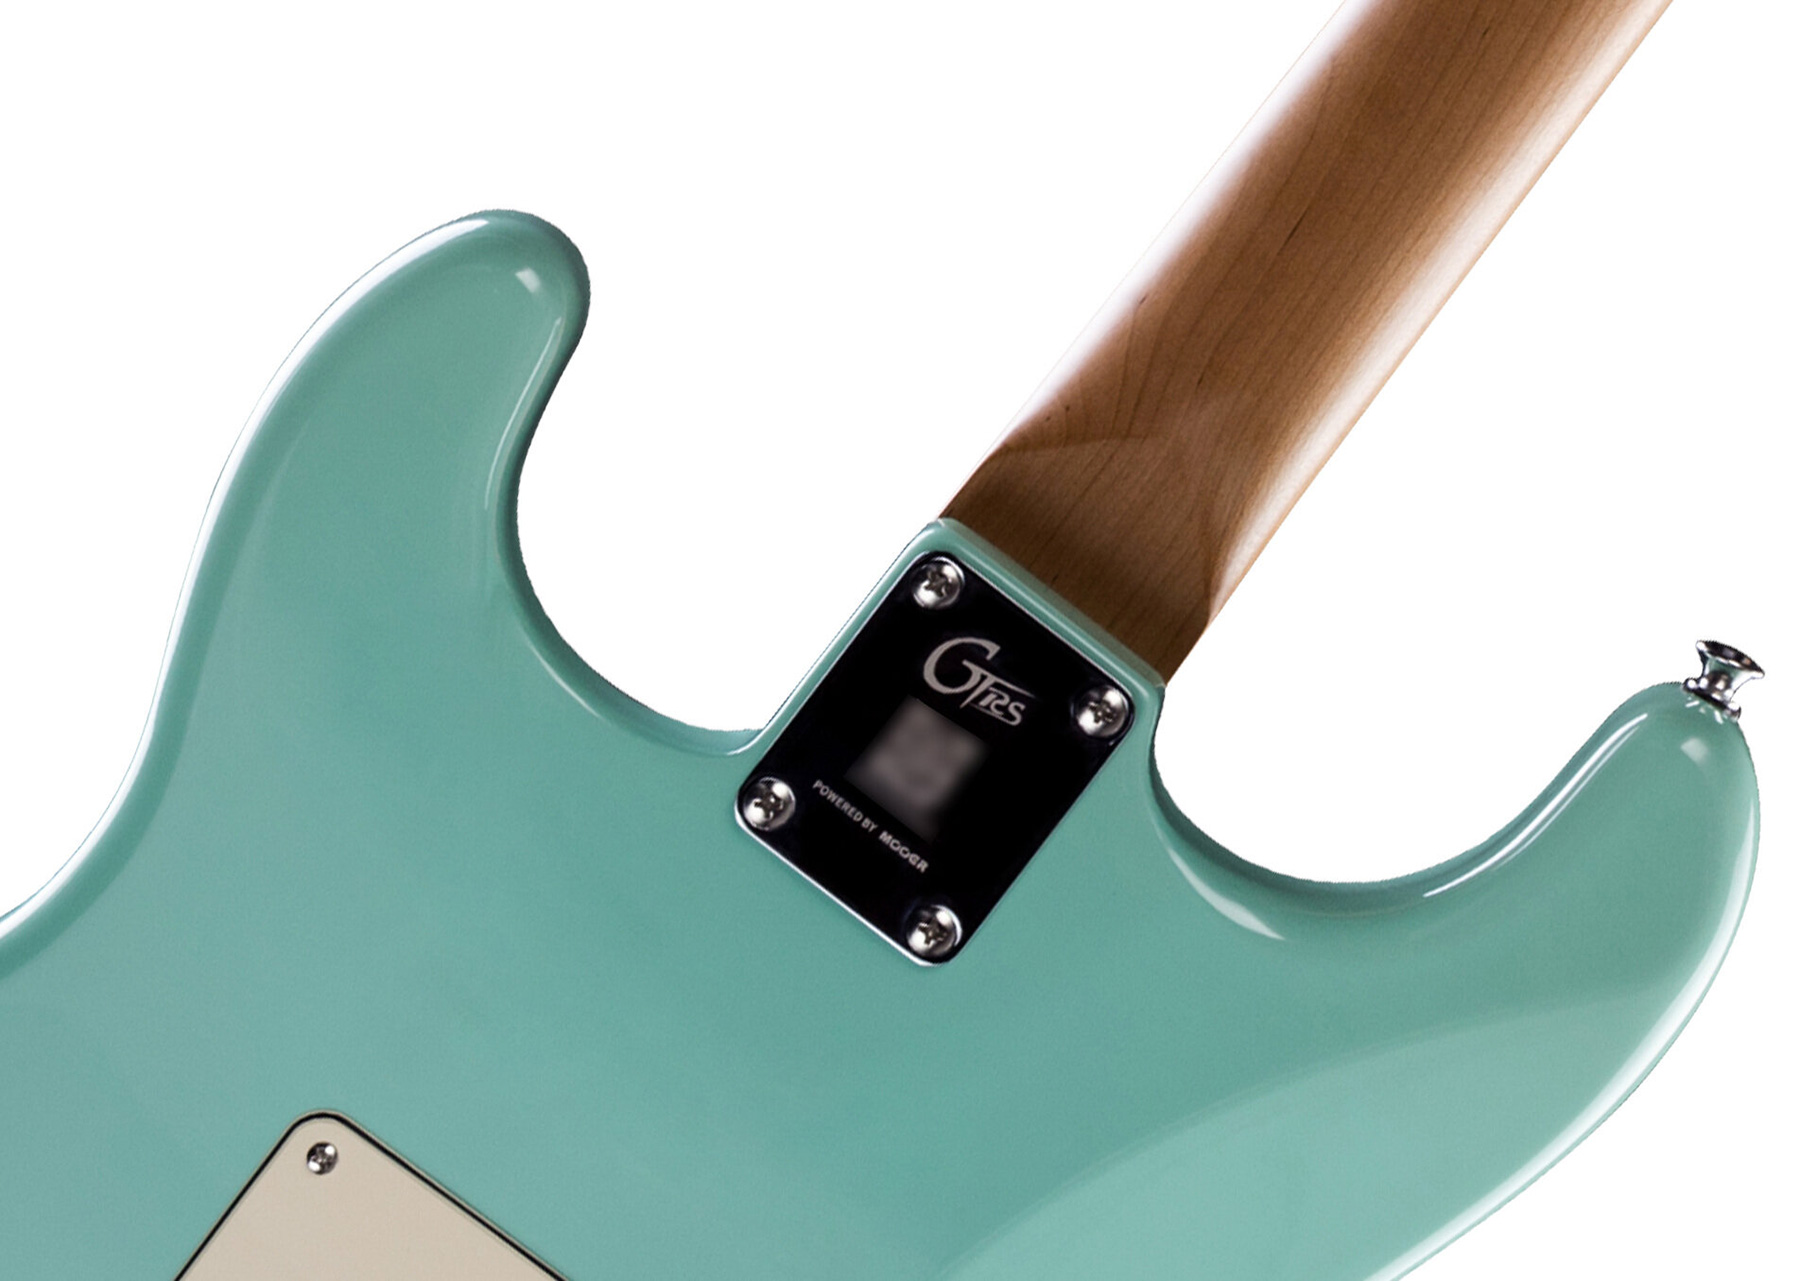 Mooer Gtrs P800 Pro Intelligent Guitar Hss Trem Rw - Mint Green - Modeling guitar - Variation 2